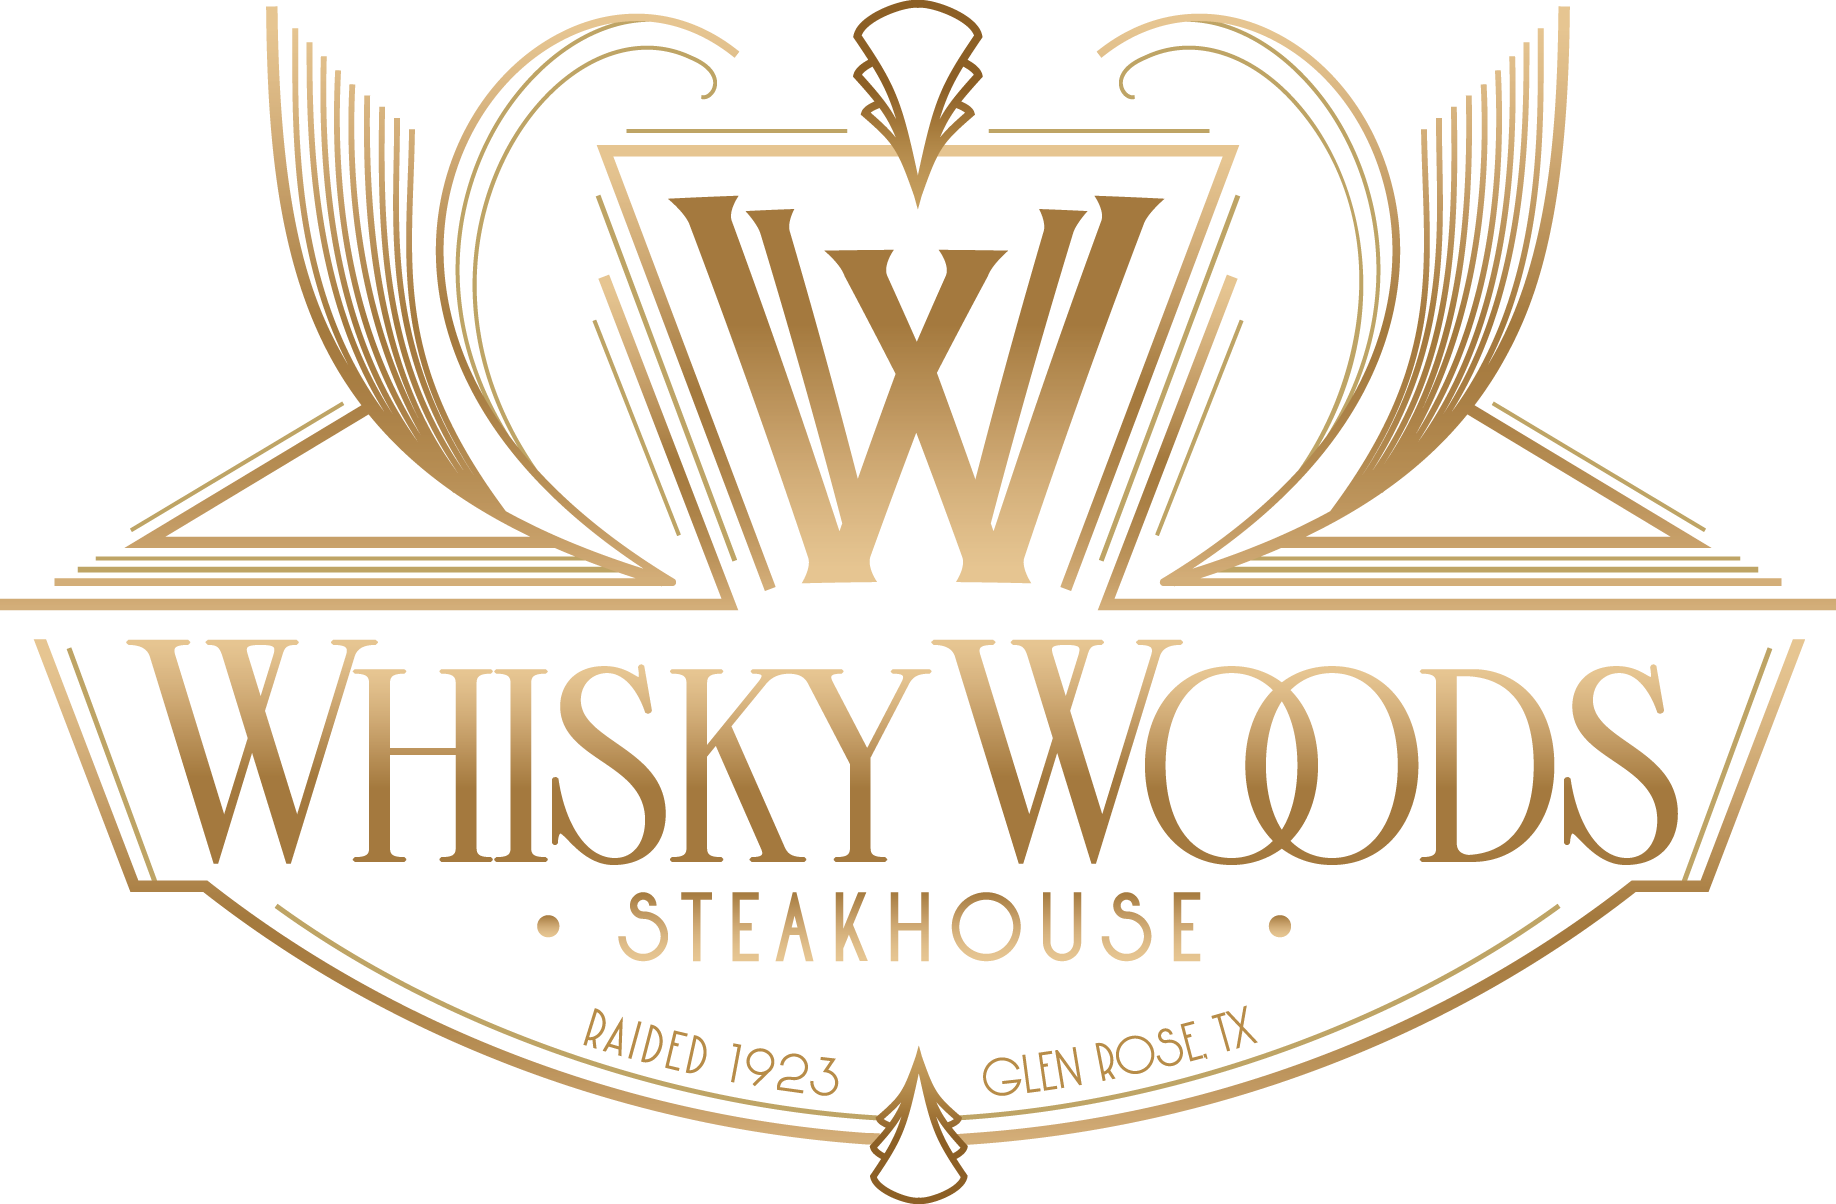 Whisky Woods Steakhouse